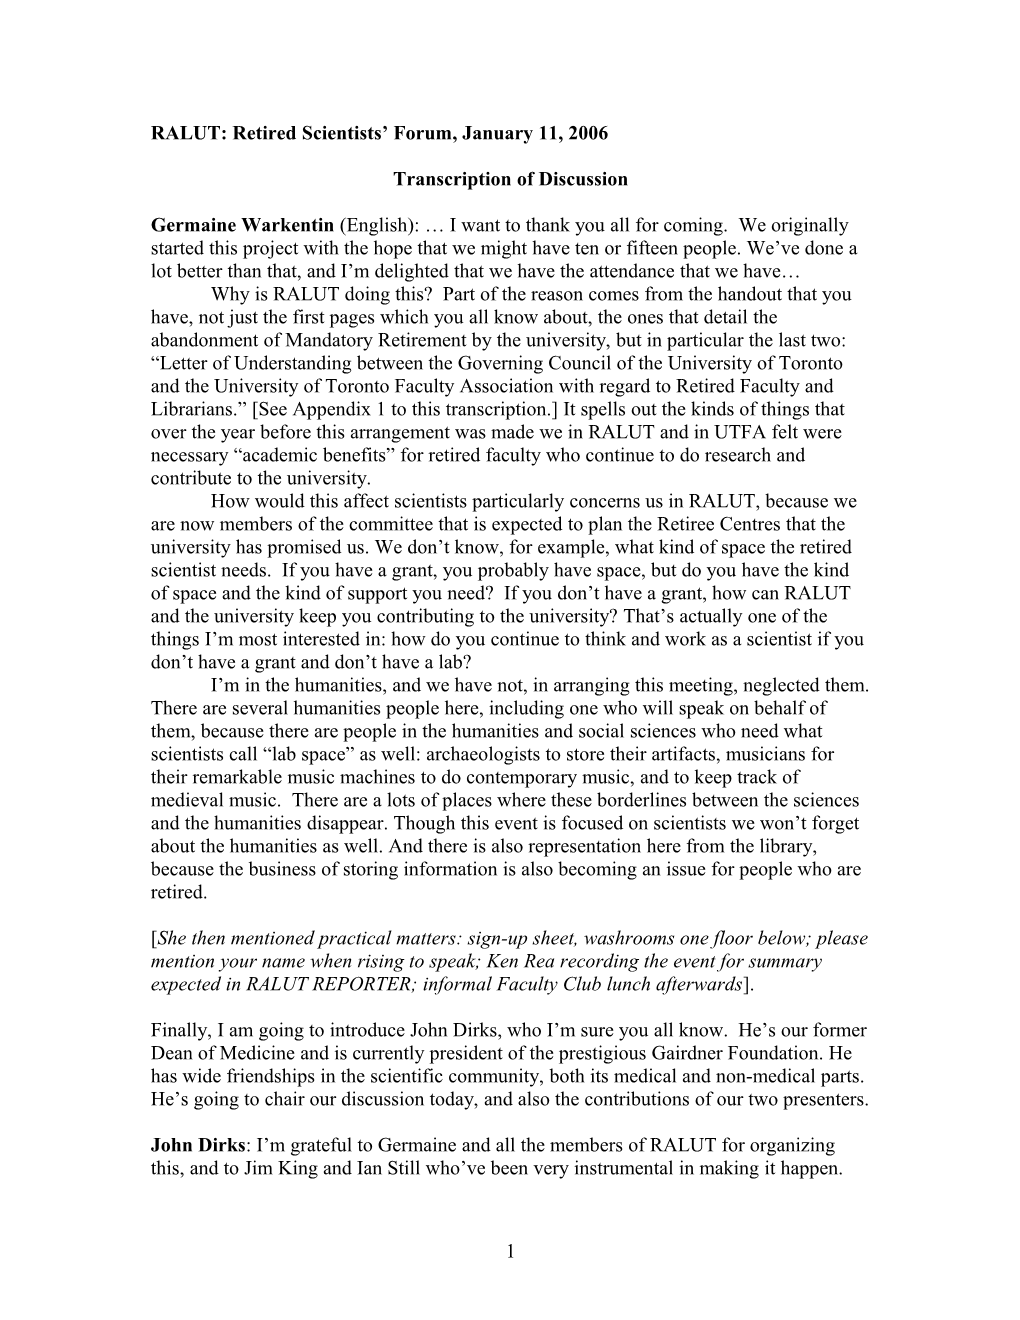 RALUT Retired Scientists Forum January 11, 2006 (Draft Transcription)